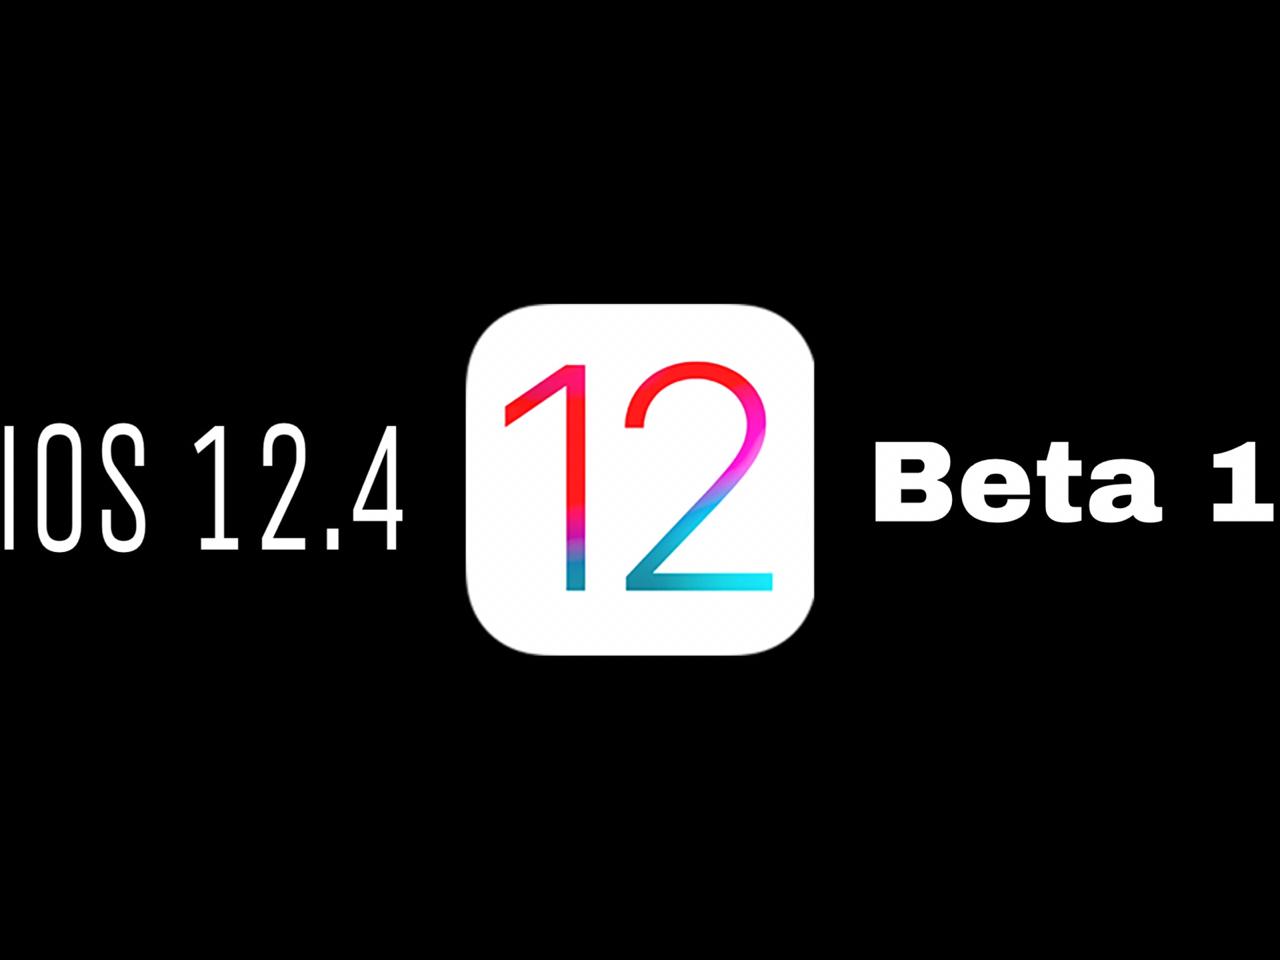 download beta profiles 16